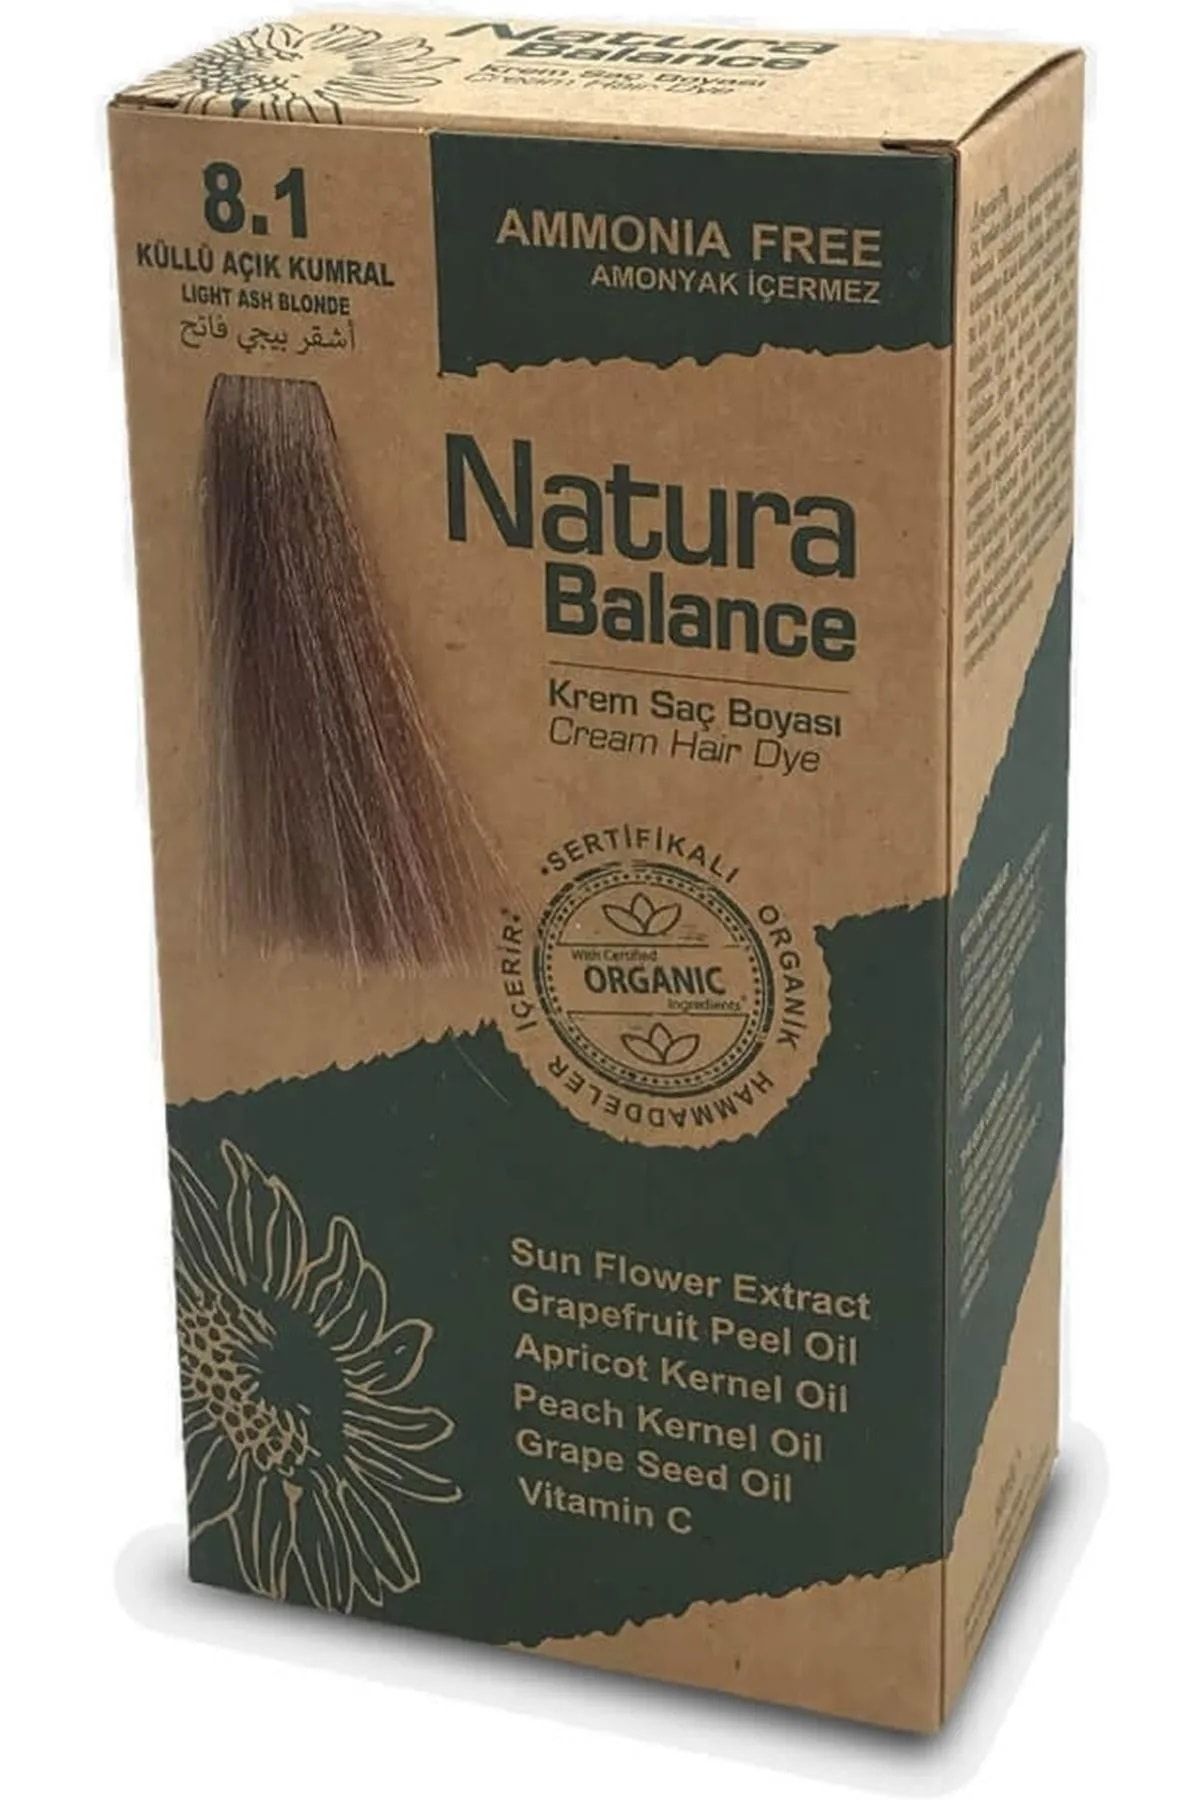 NATURABALANCE Natura Balance 8.1 Küllü Açık Kumral Organik Krem Saç Boyası